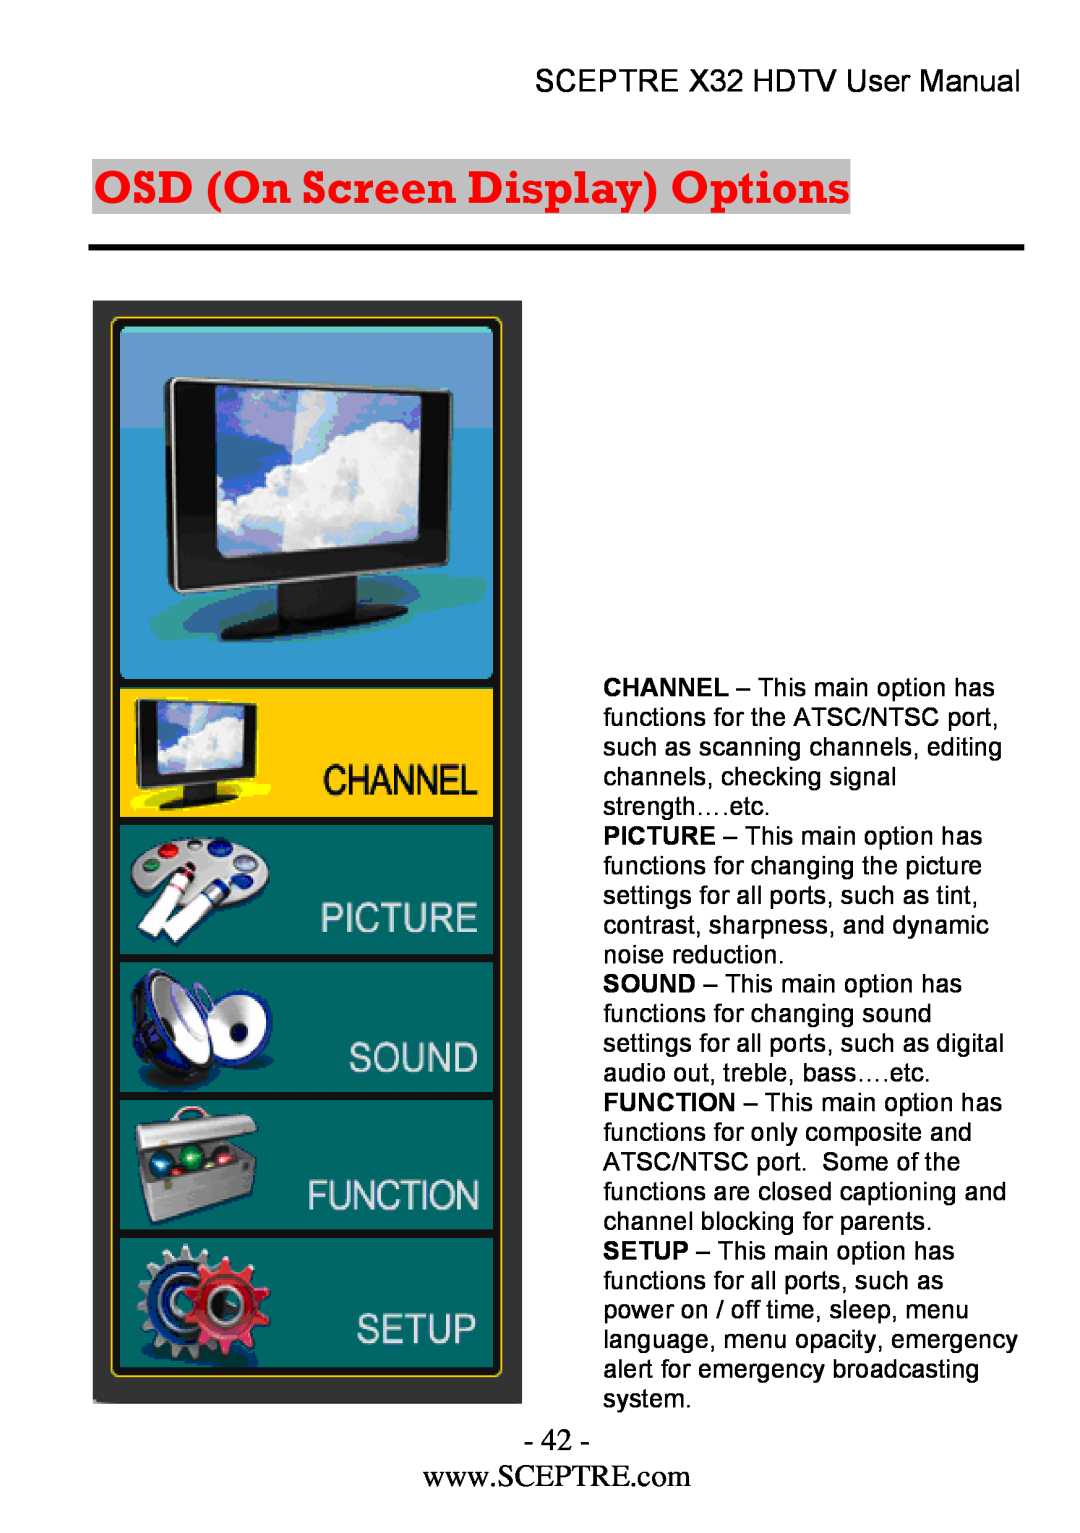 Sceptre Technologies x32 user manual OSD On Screen Display Options, SCEPTRE X32 HDTV User Manual 